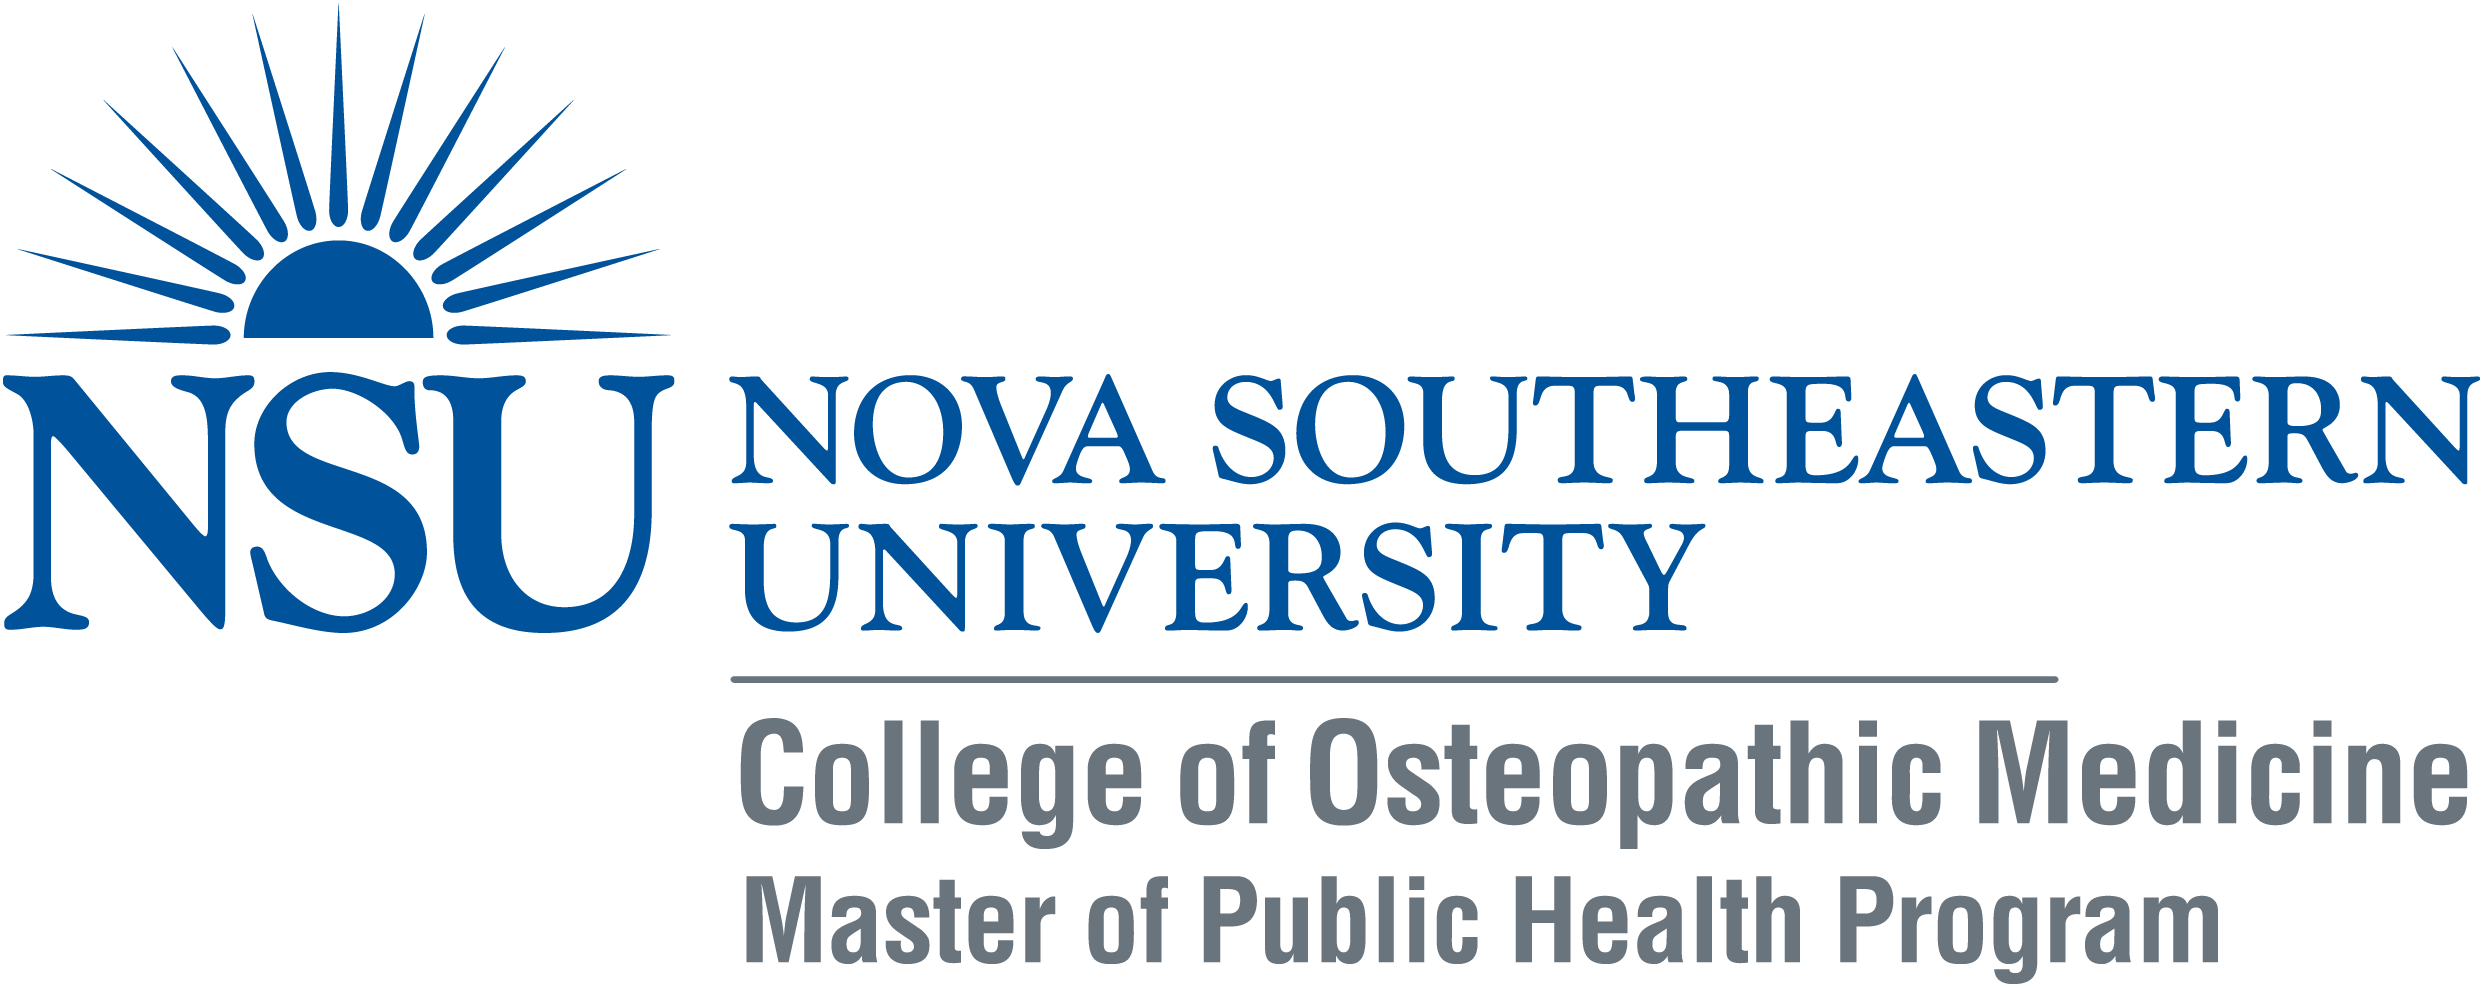 Nova Southeastern University Logo - Nova Southeastern University on Education for Public Health